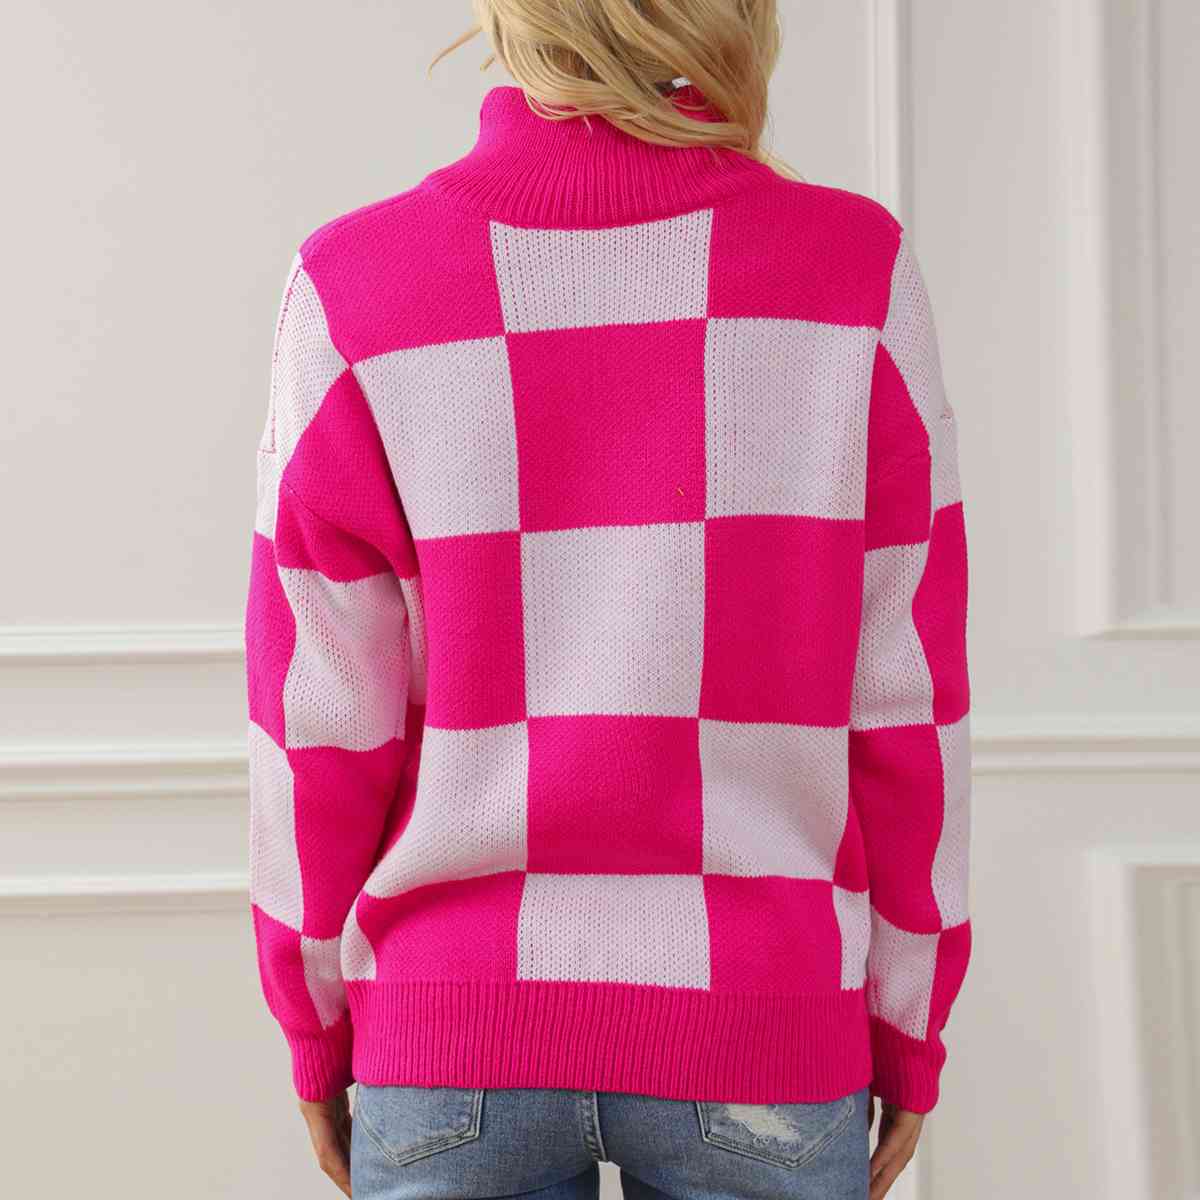 Checkered Half Zip Long Sleeve Sweater - Ivy & Lane